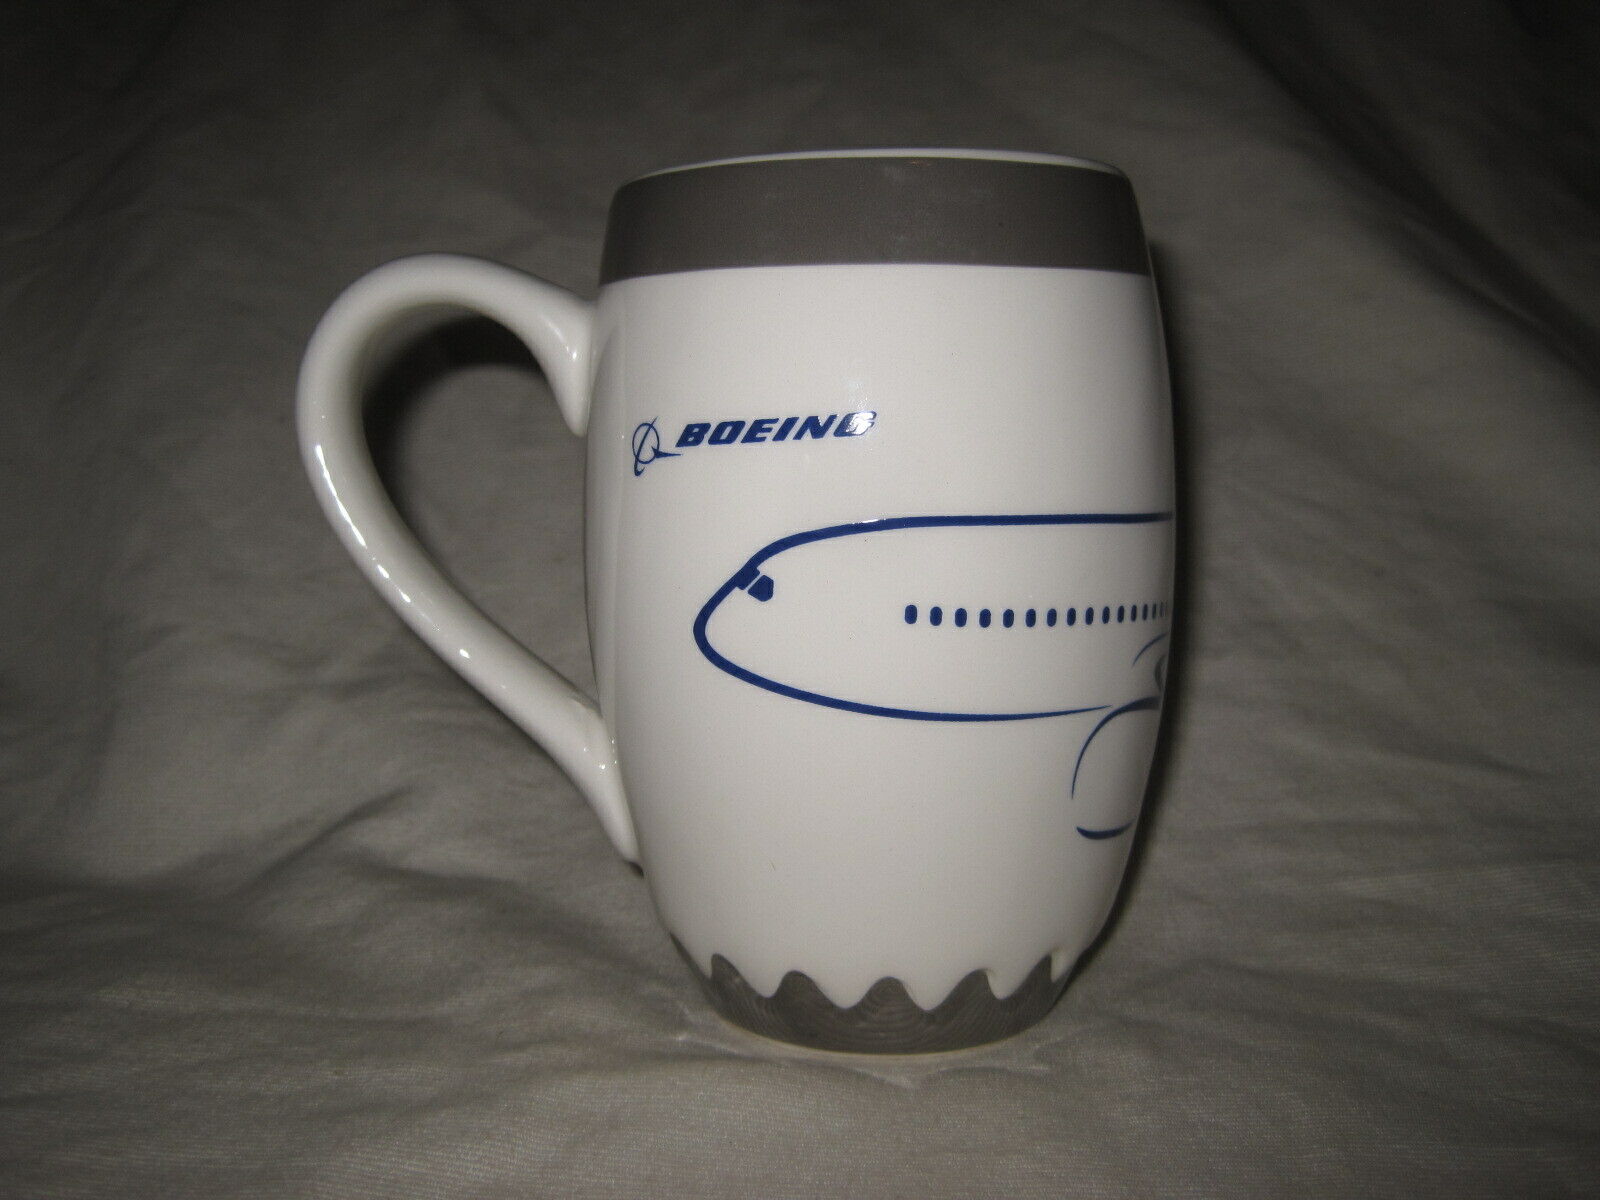 Boeing 787 Dreamliner Engine Shape Coffee Mug 5 1/4” Tall w/ Silver Trim